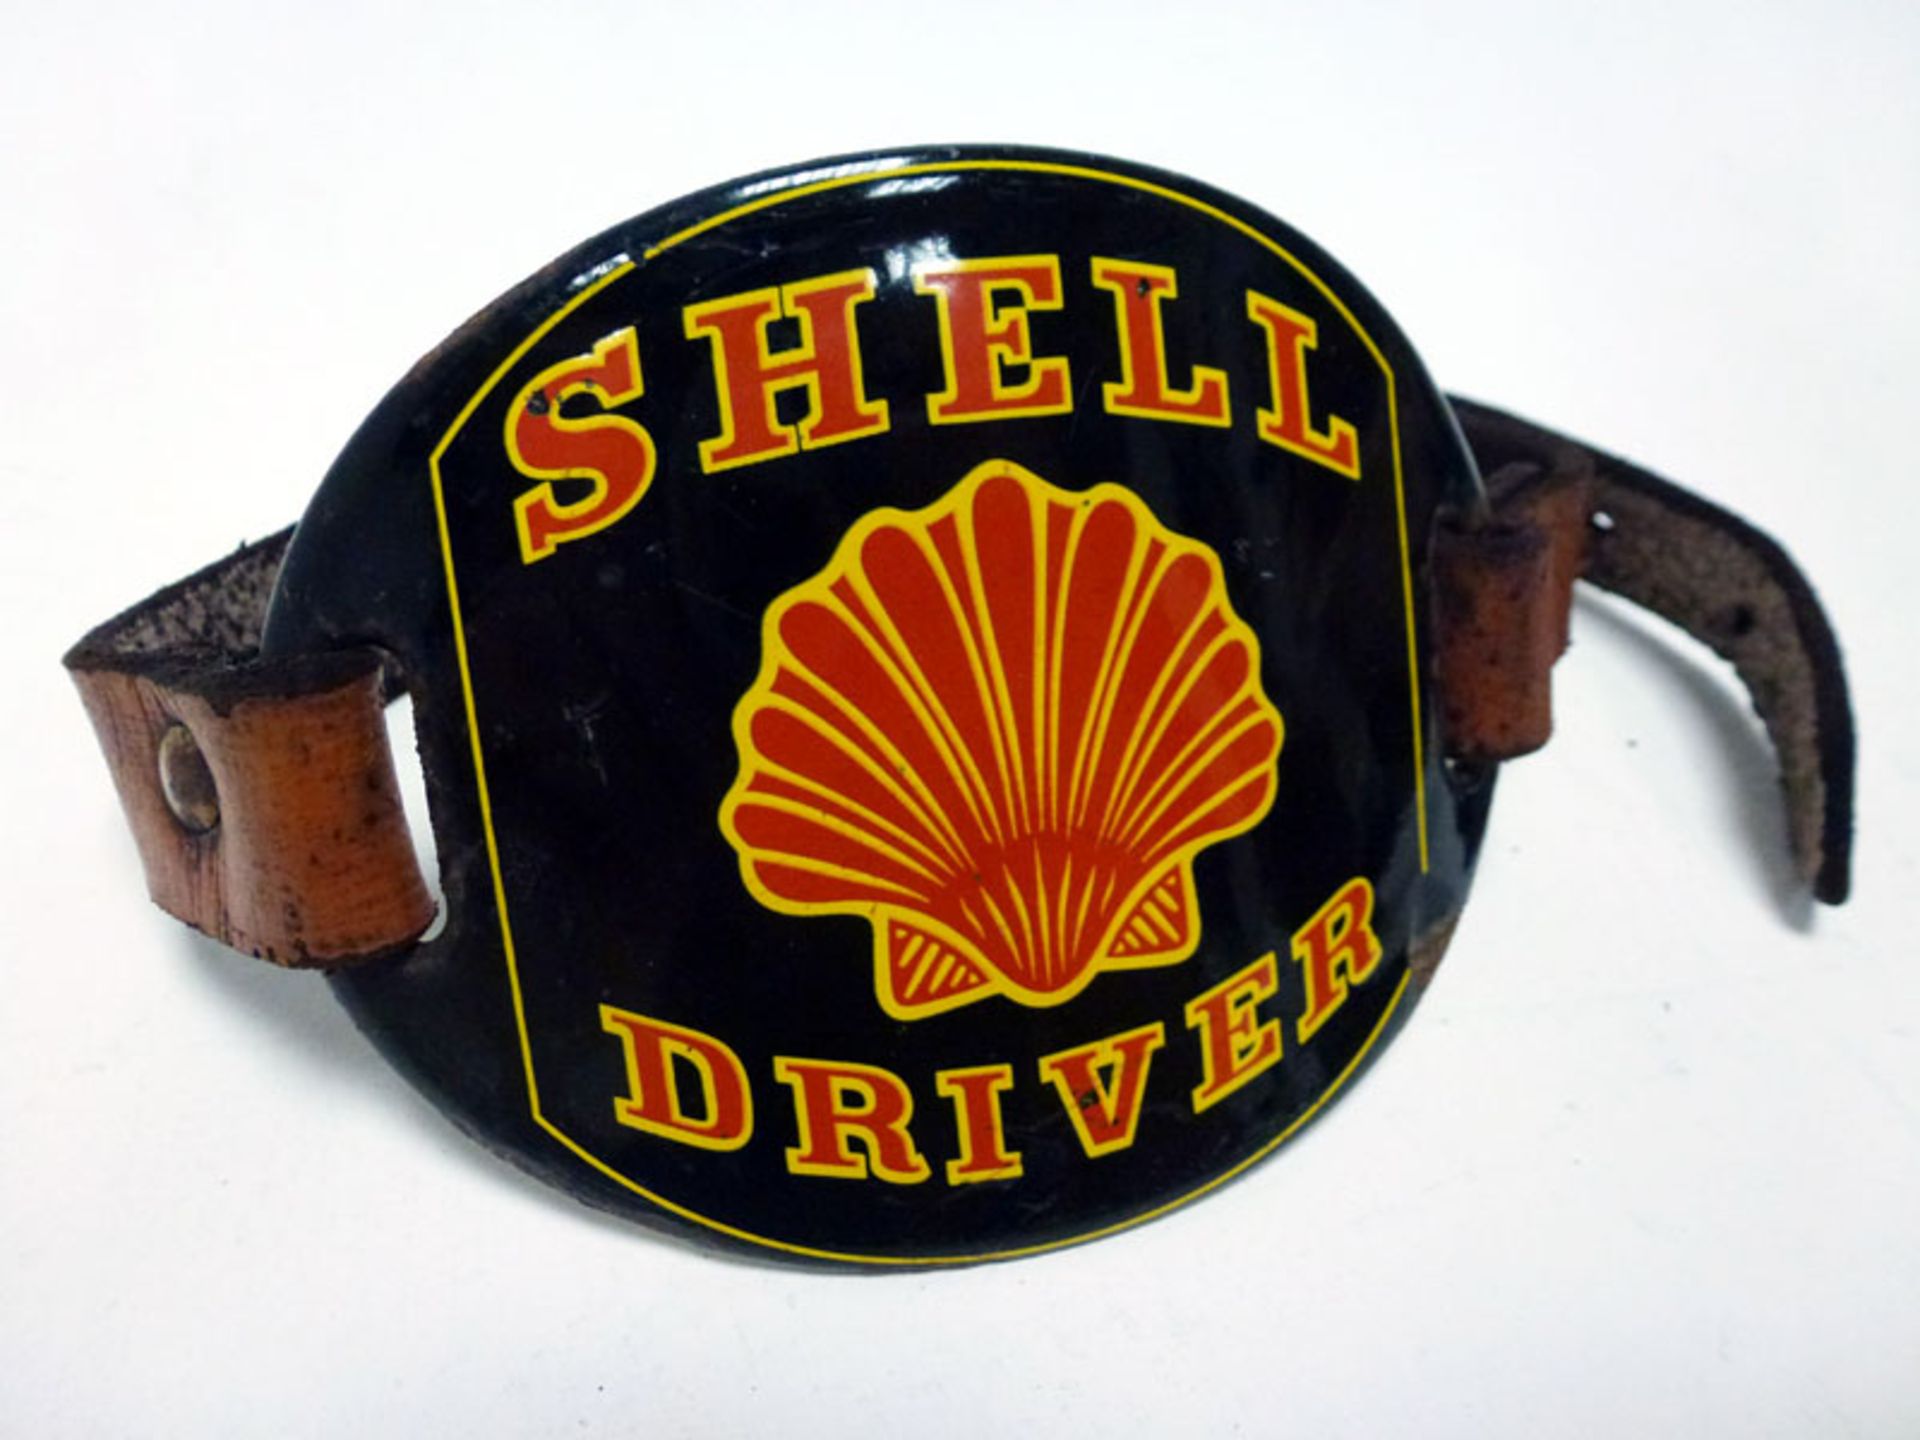 An Original Shell Driver's Armband, c1930s